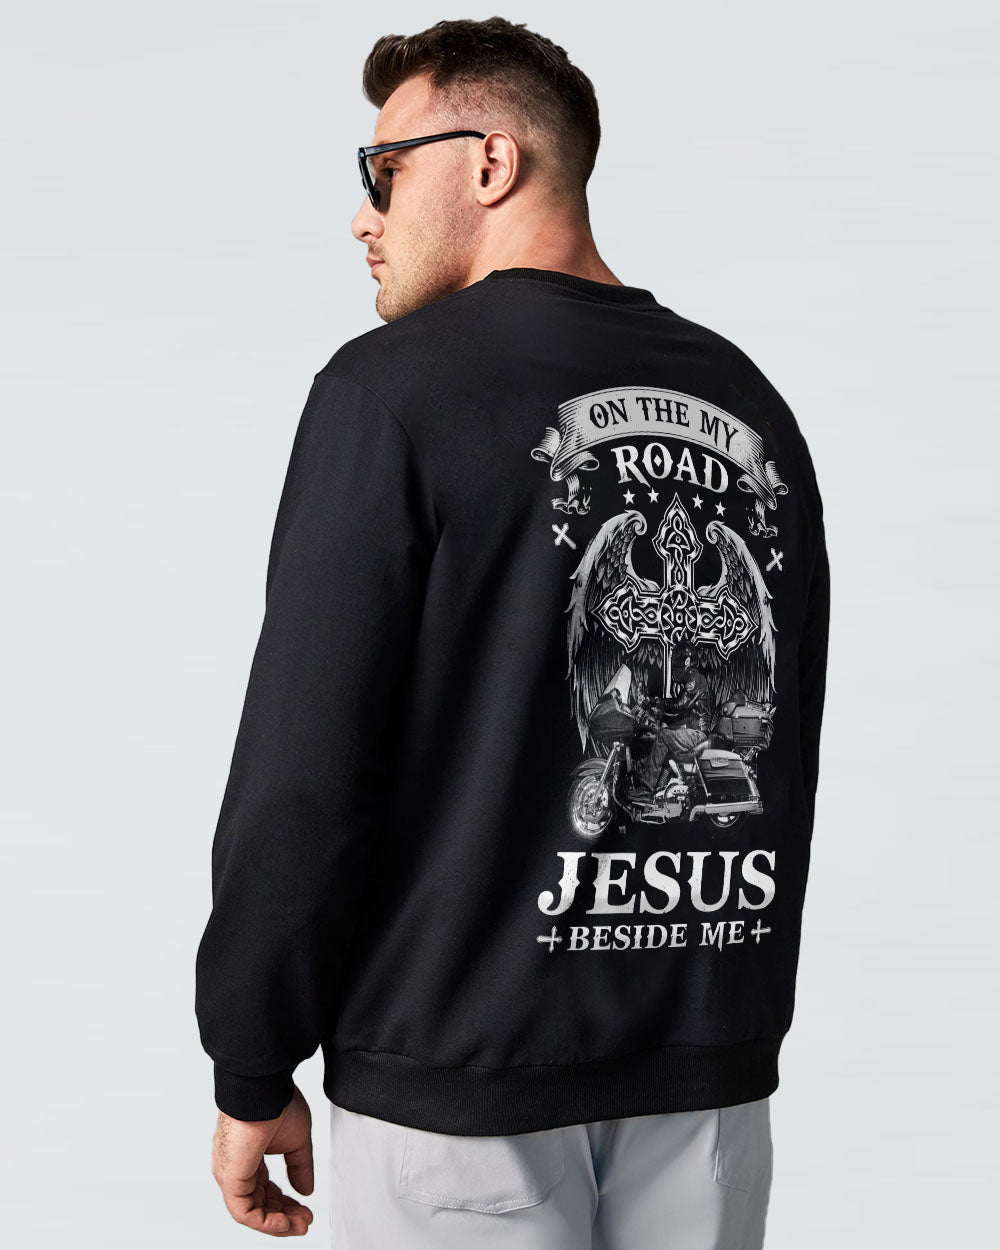 On The My Road Jesus Beside Me Biker Men's Christian Sweatshirt